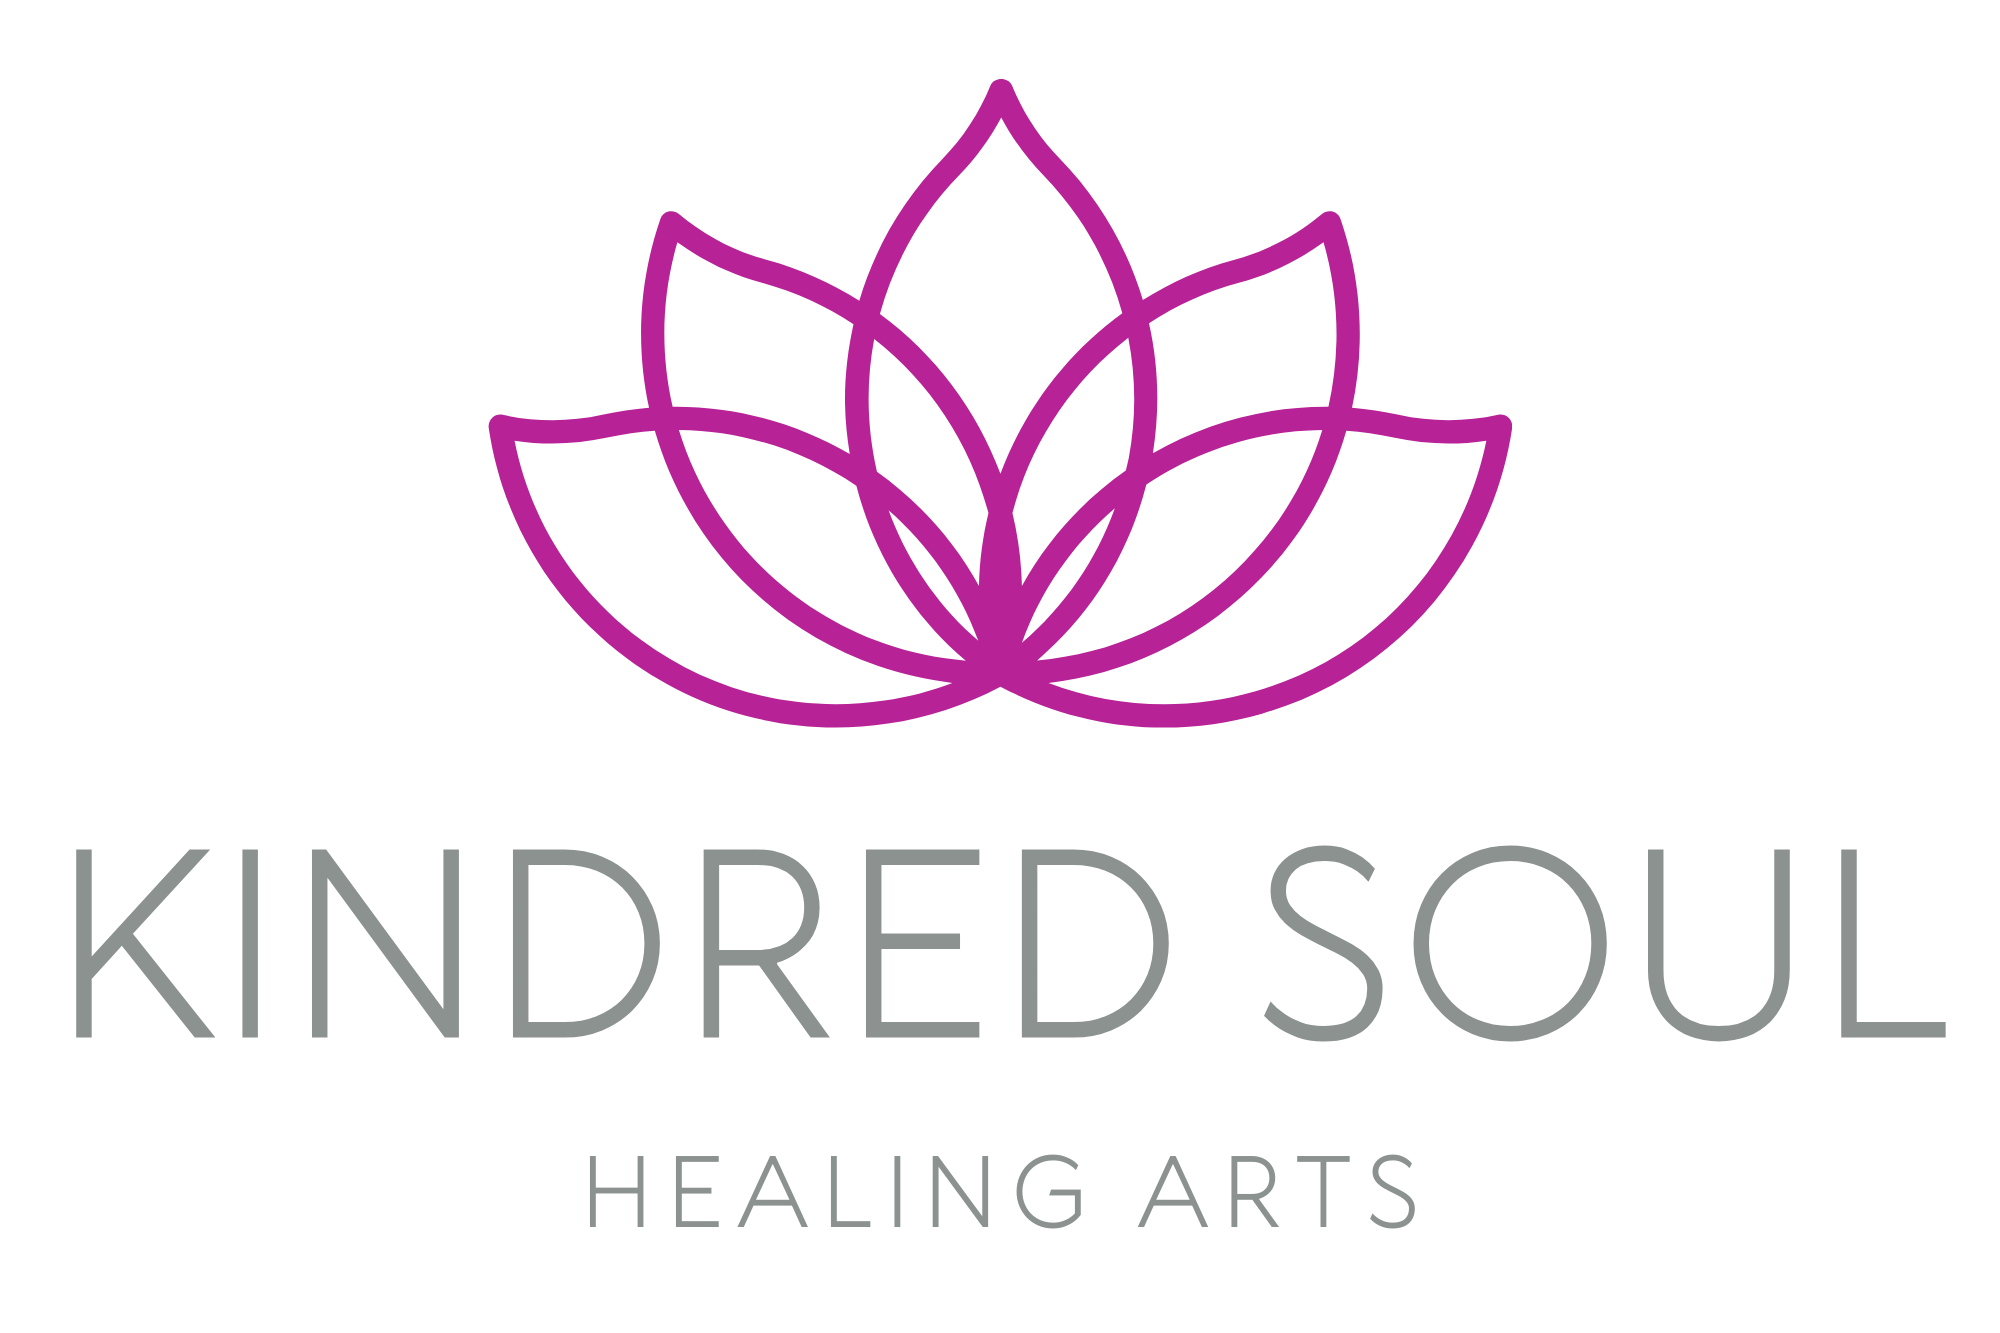 kindred soul healing arts